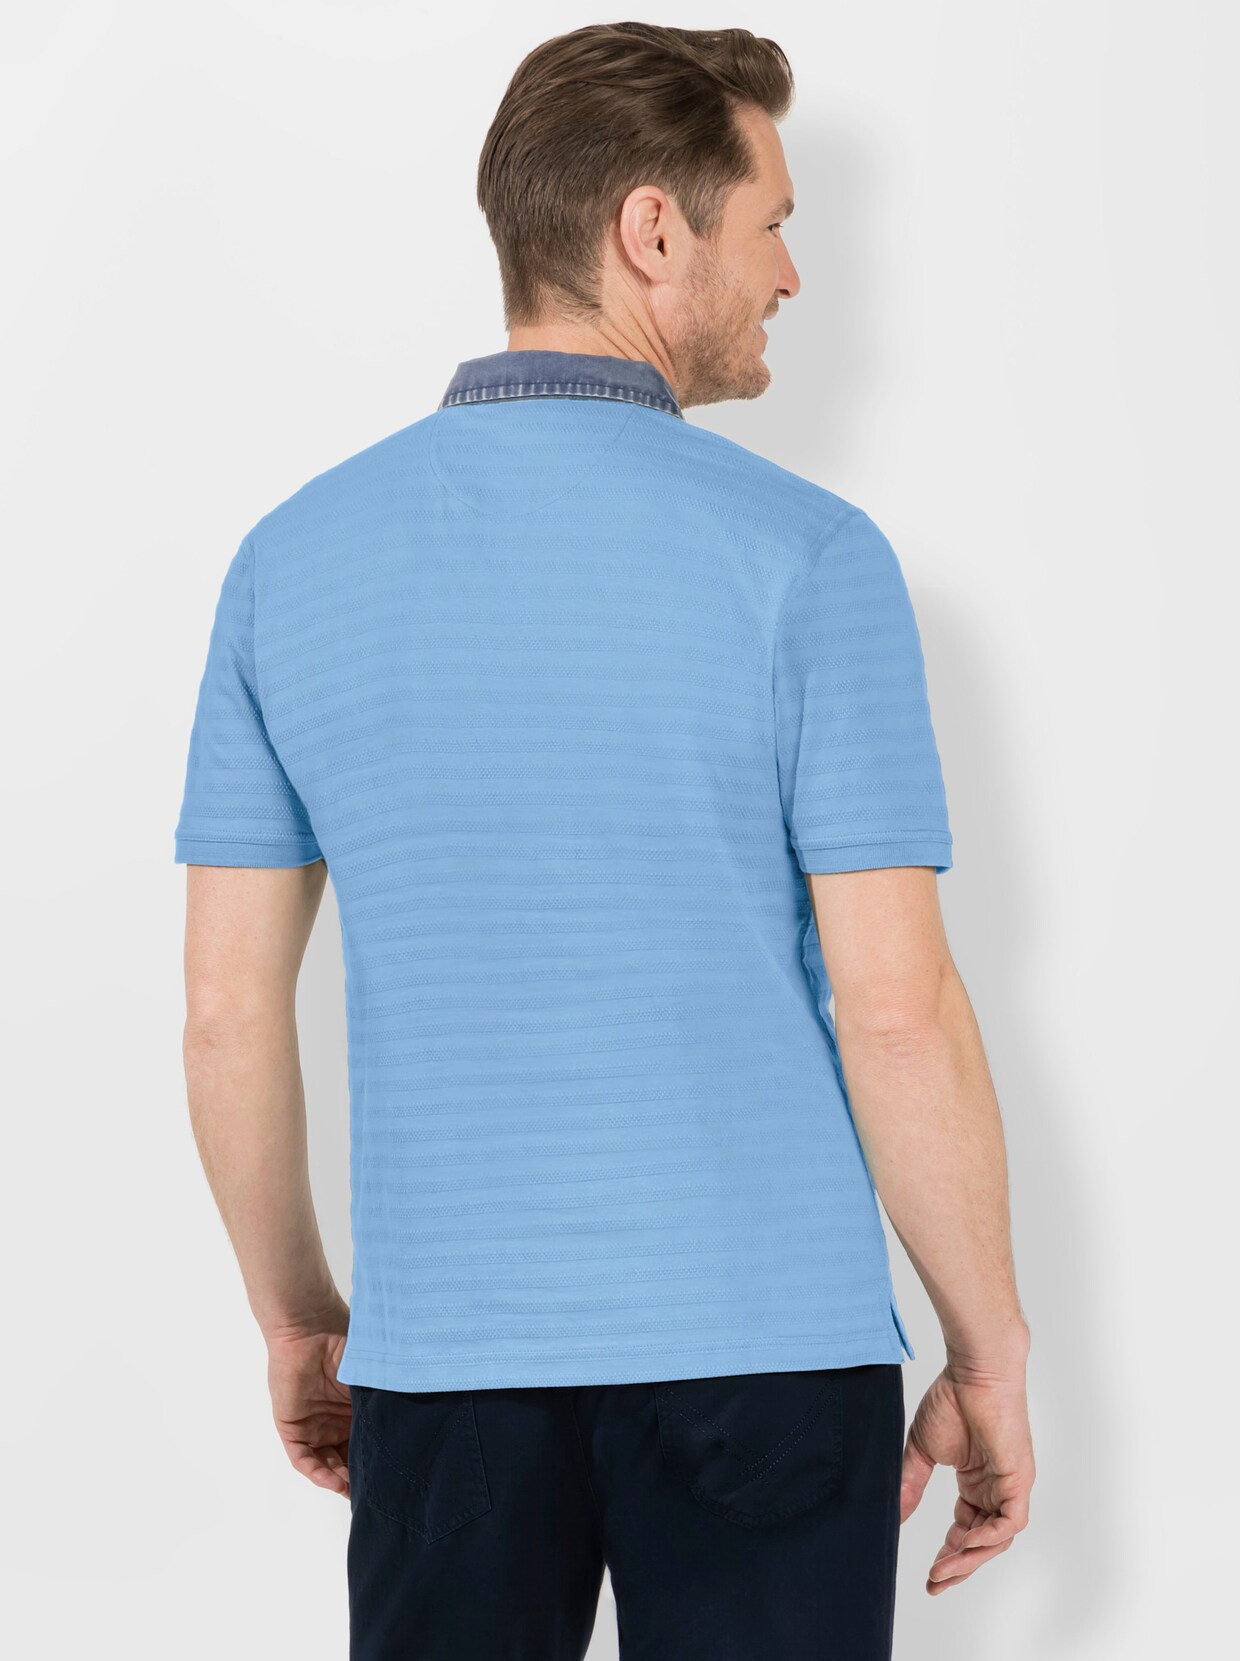 Marco Donati Kurzarm-Shirt - jeansblau